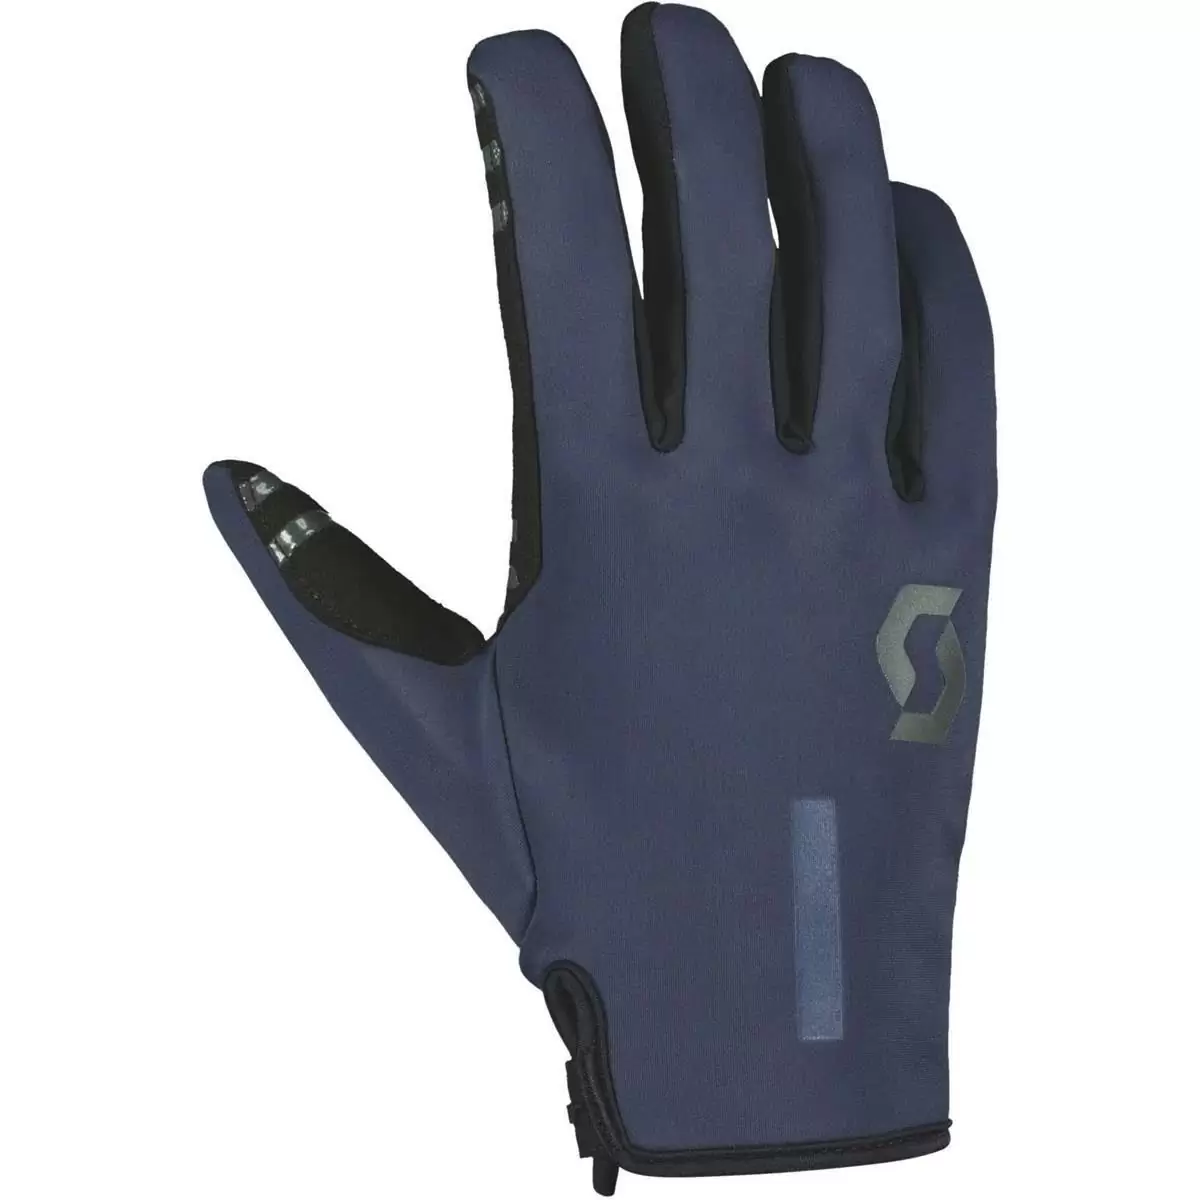 Neoride Winter MTB Gloves Blue Size S #1